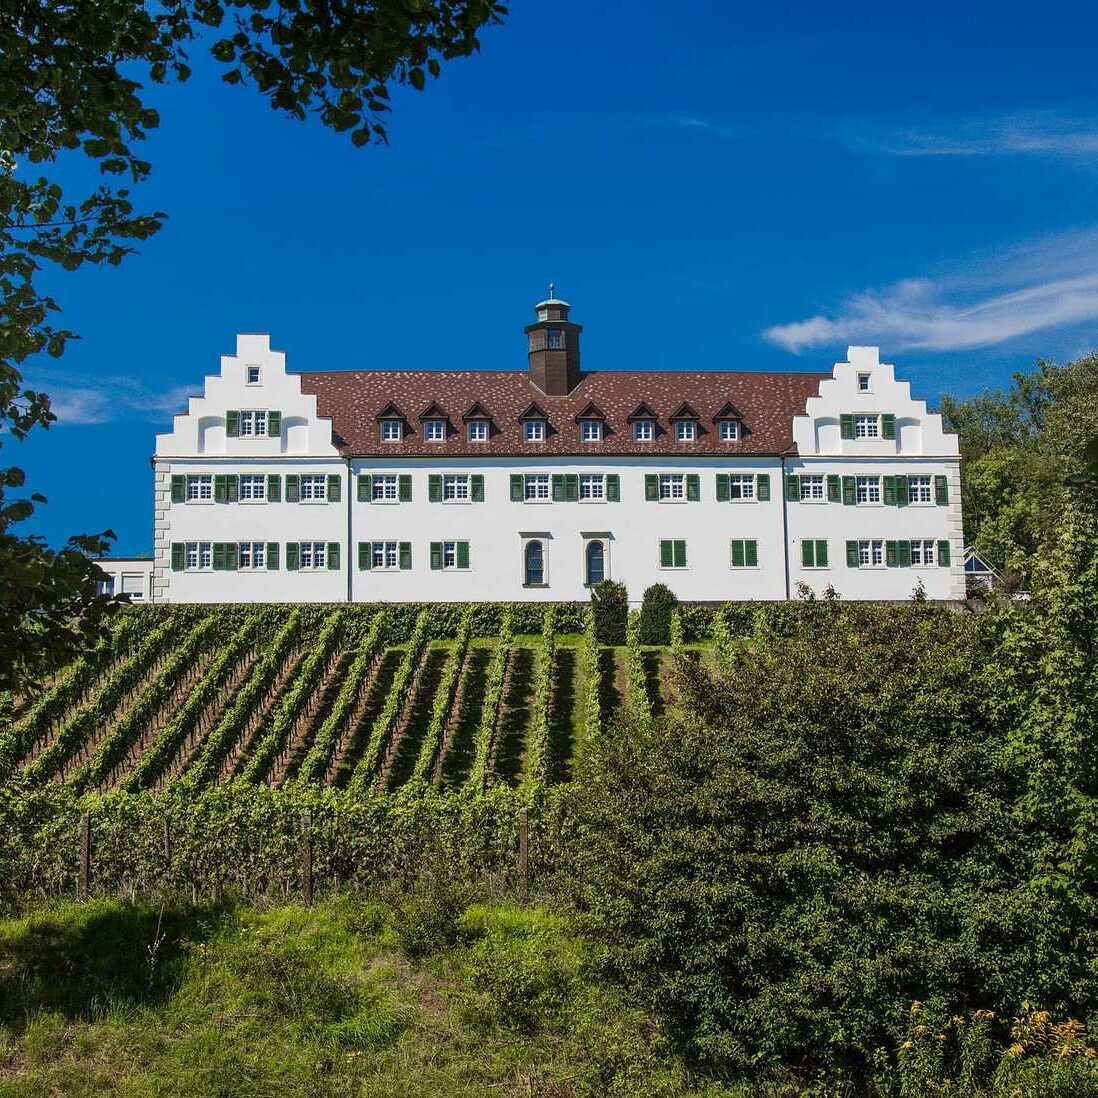 Derks24-castle-hersberg-vineyard-event-2661971-1600x